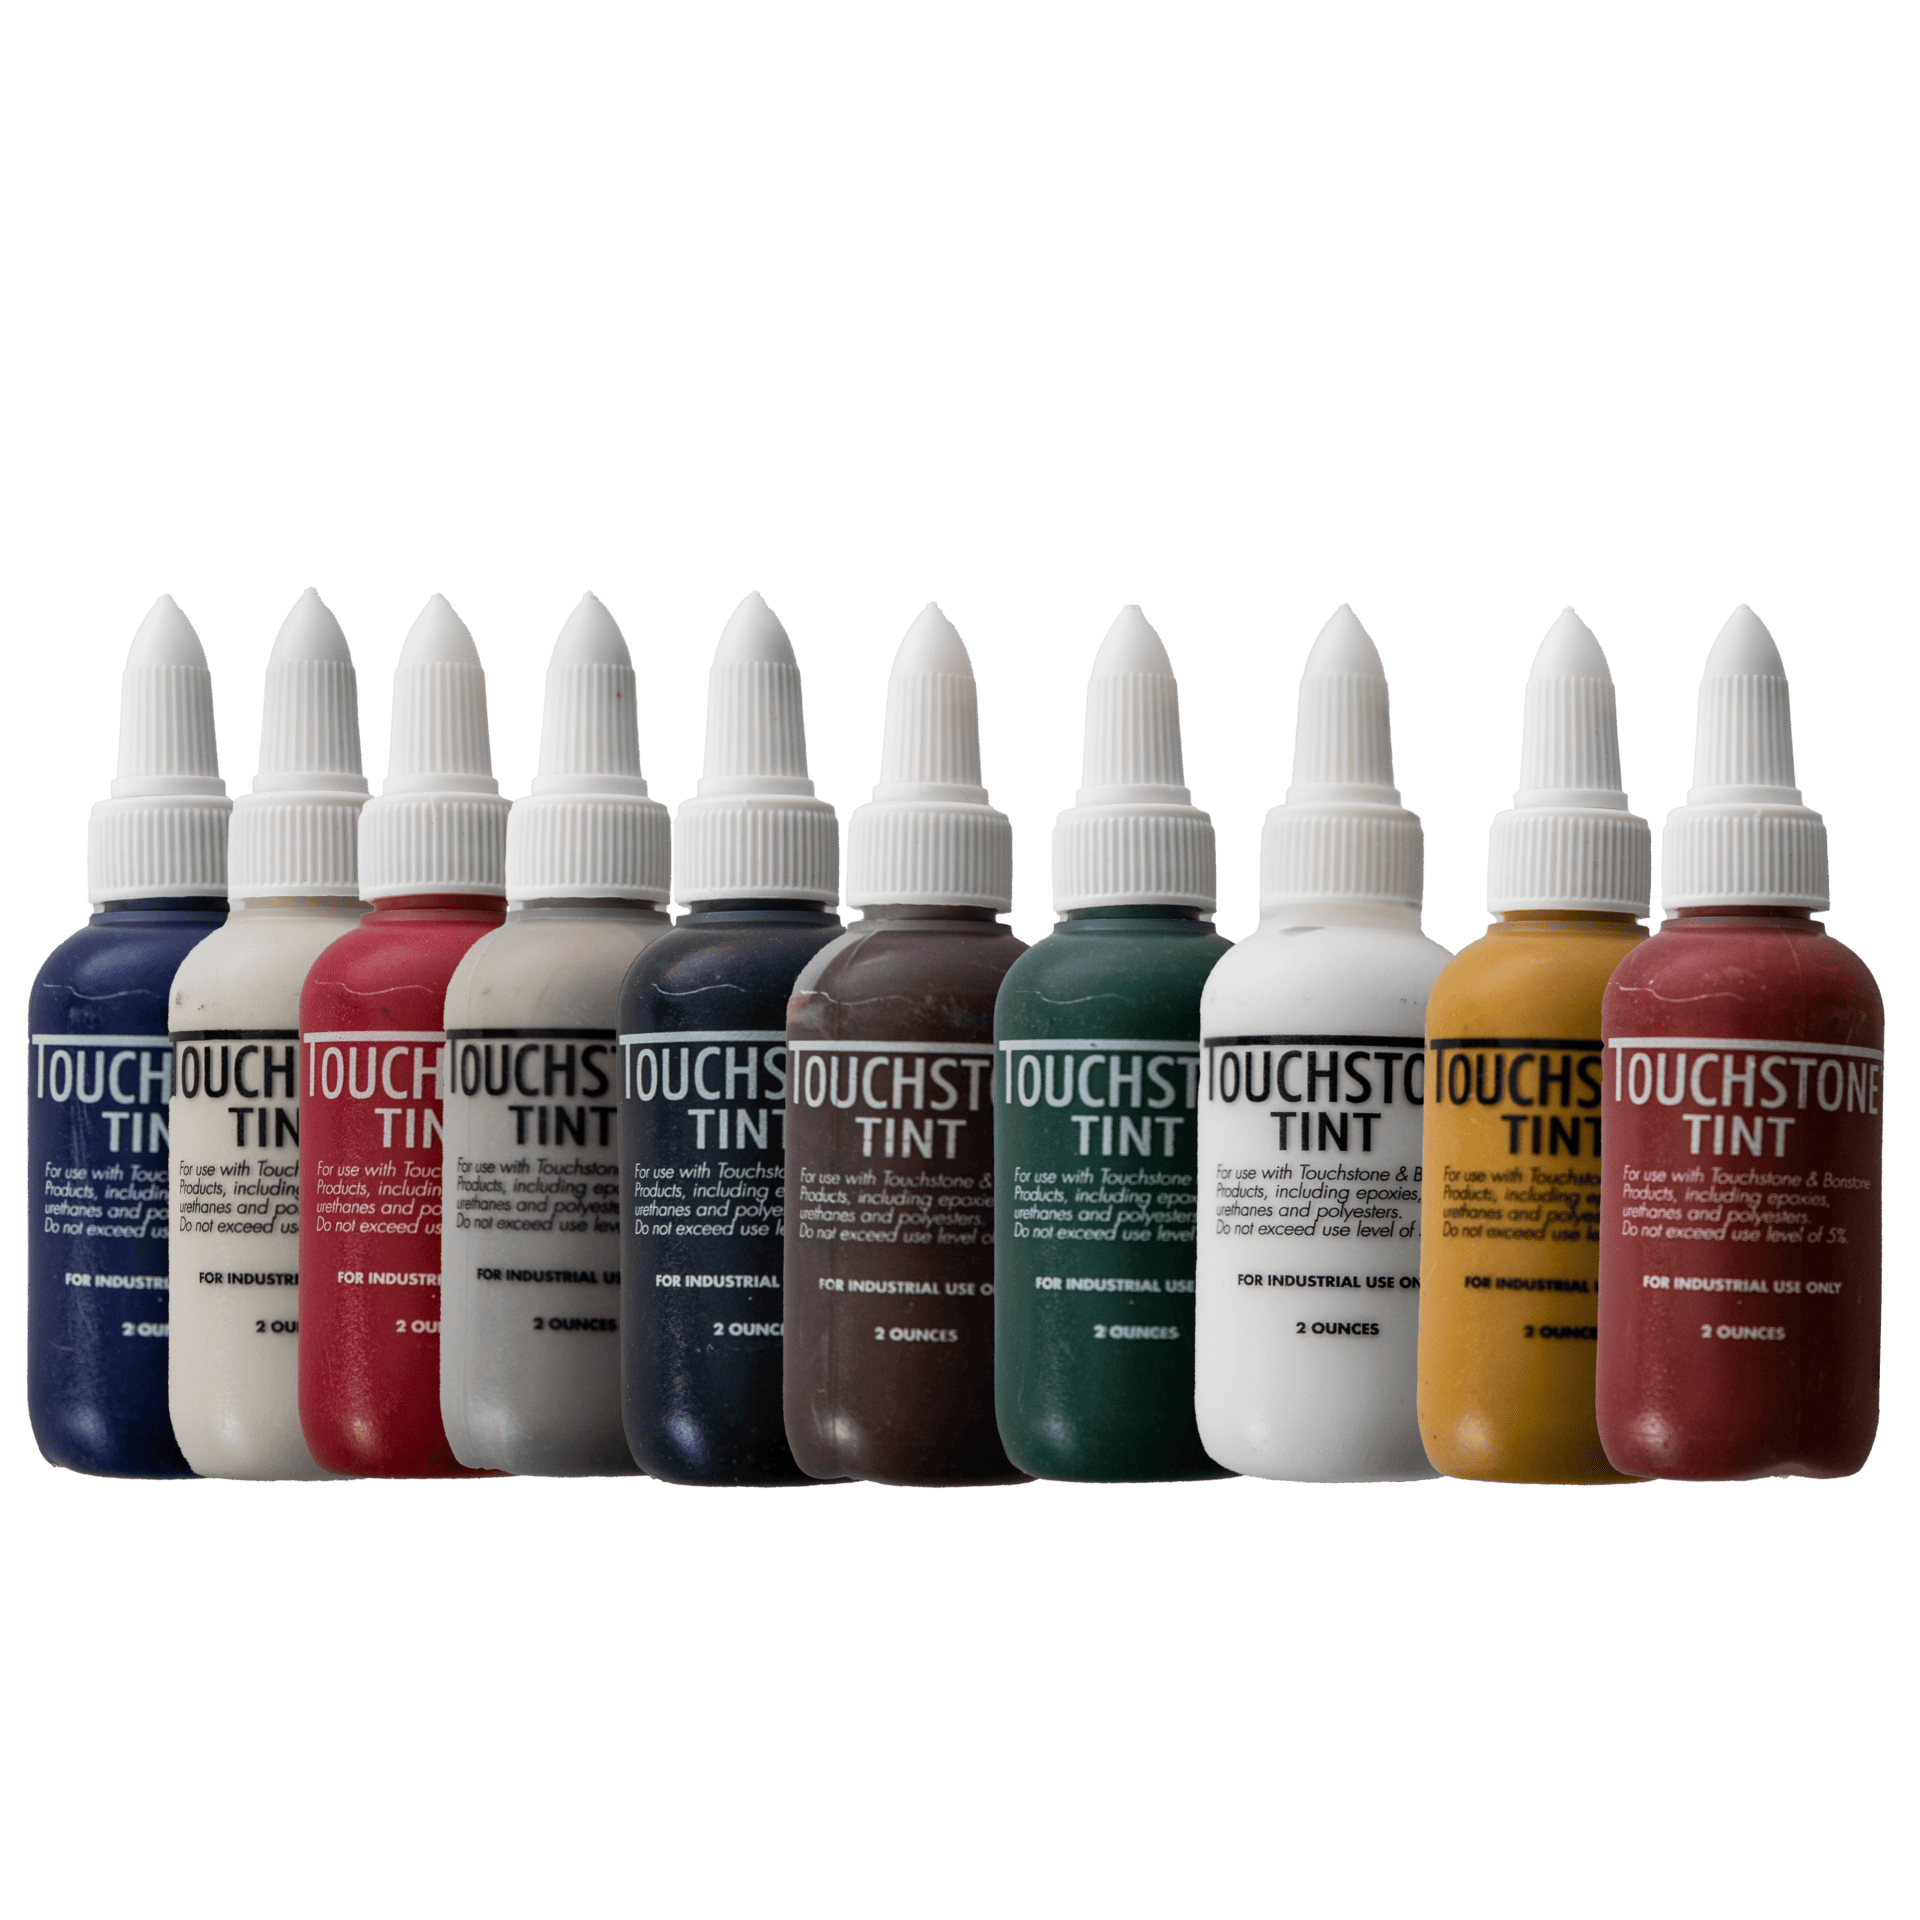 Primary Colors Epoxy Pigment (Colorant, Dye, Tint) 2 oz. Kit (5 colorants  Red, Blue, Black, Yellow, White